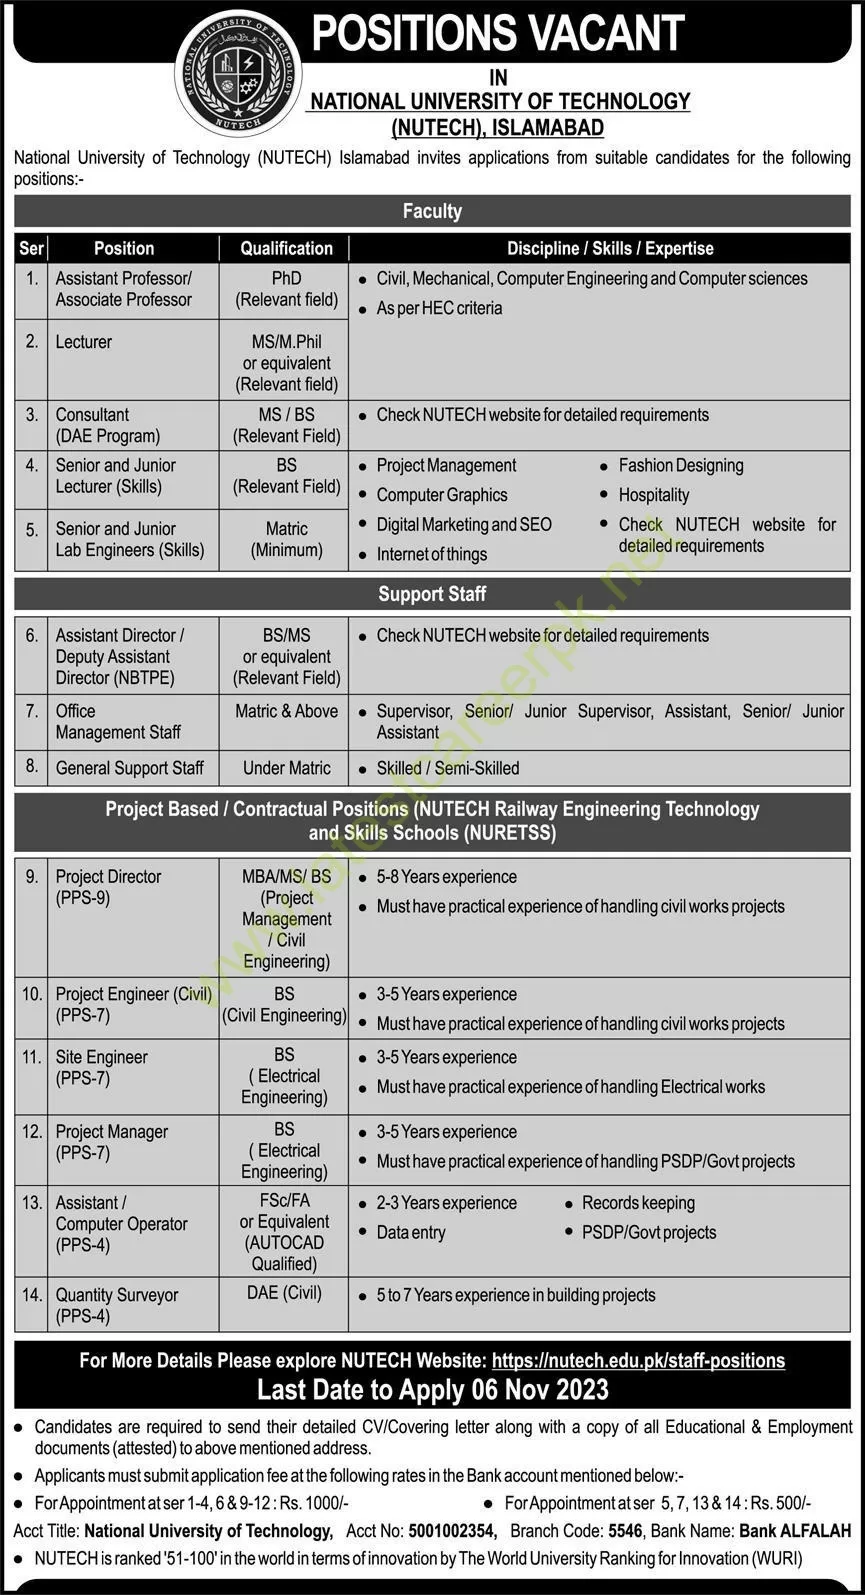 National-University-of-Technology-NUTECH-Islamabad-Jobs-23-Oct-2023